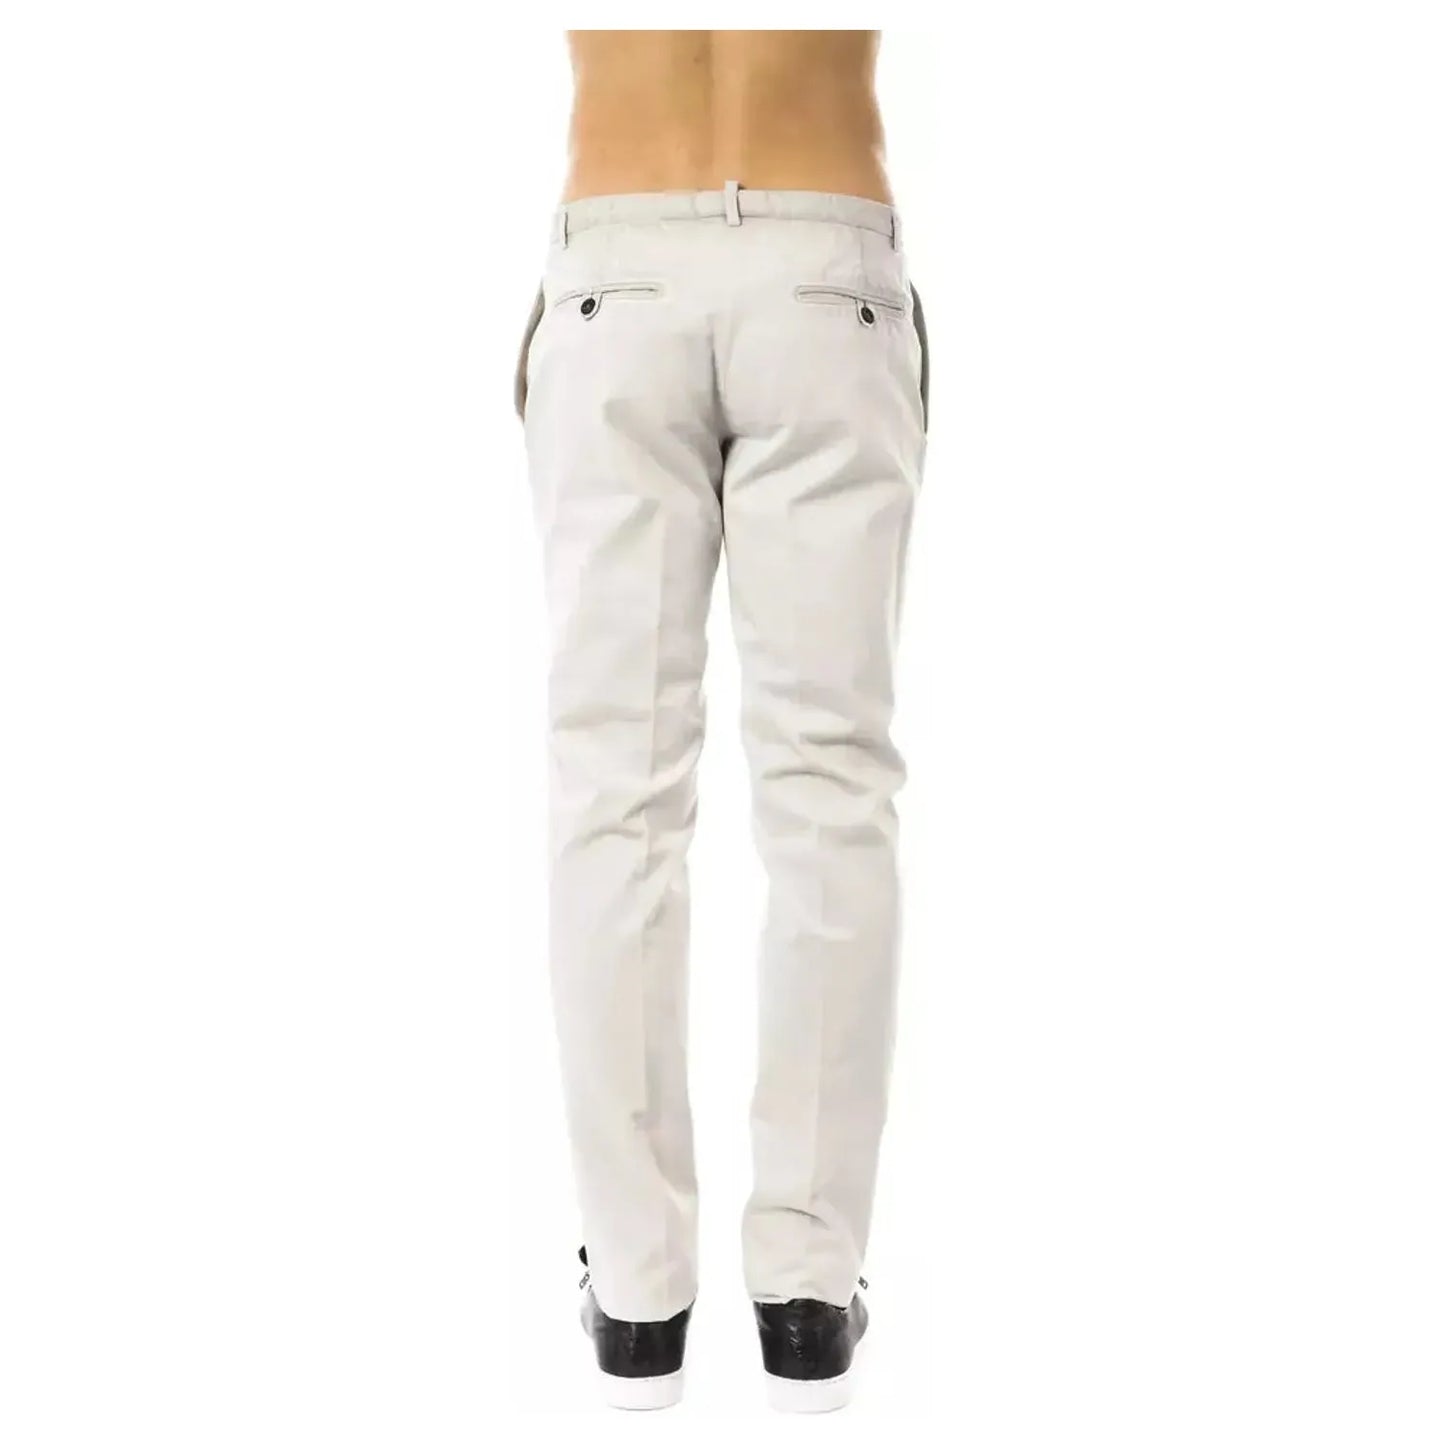 Uominitaliani Elegant Gray Casual Cotton Pants Jeans & Pants jeans-pant-3 stock_product_image_17040_258579841-16-a3219bee-6e8.webp